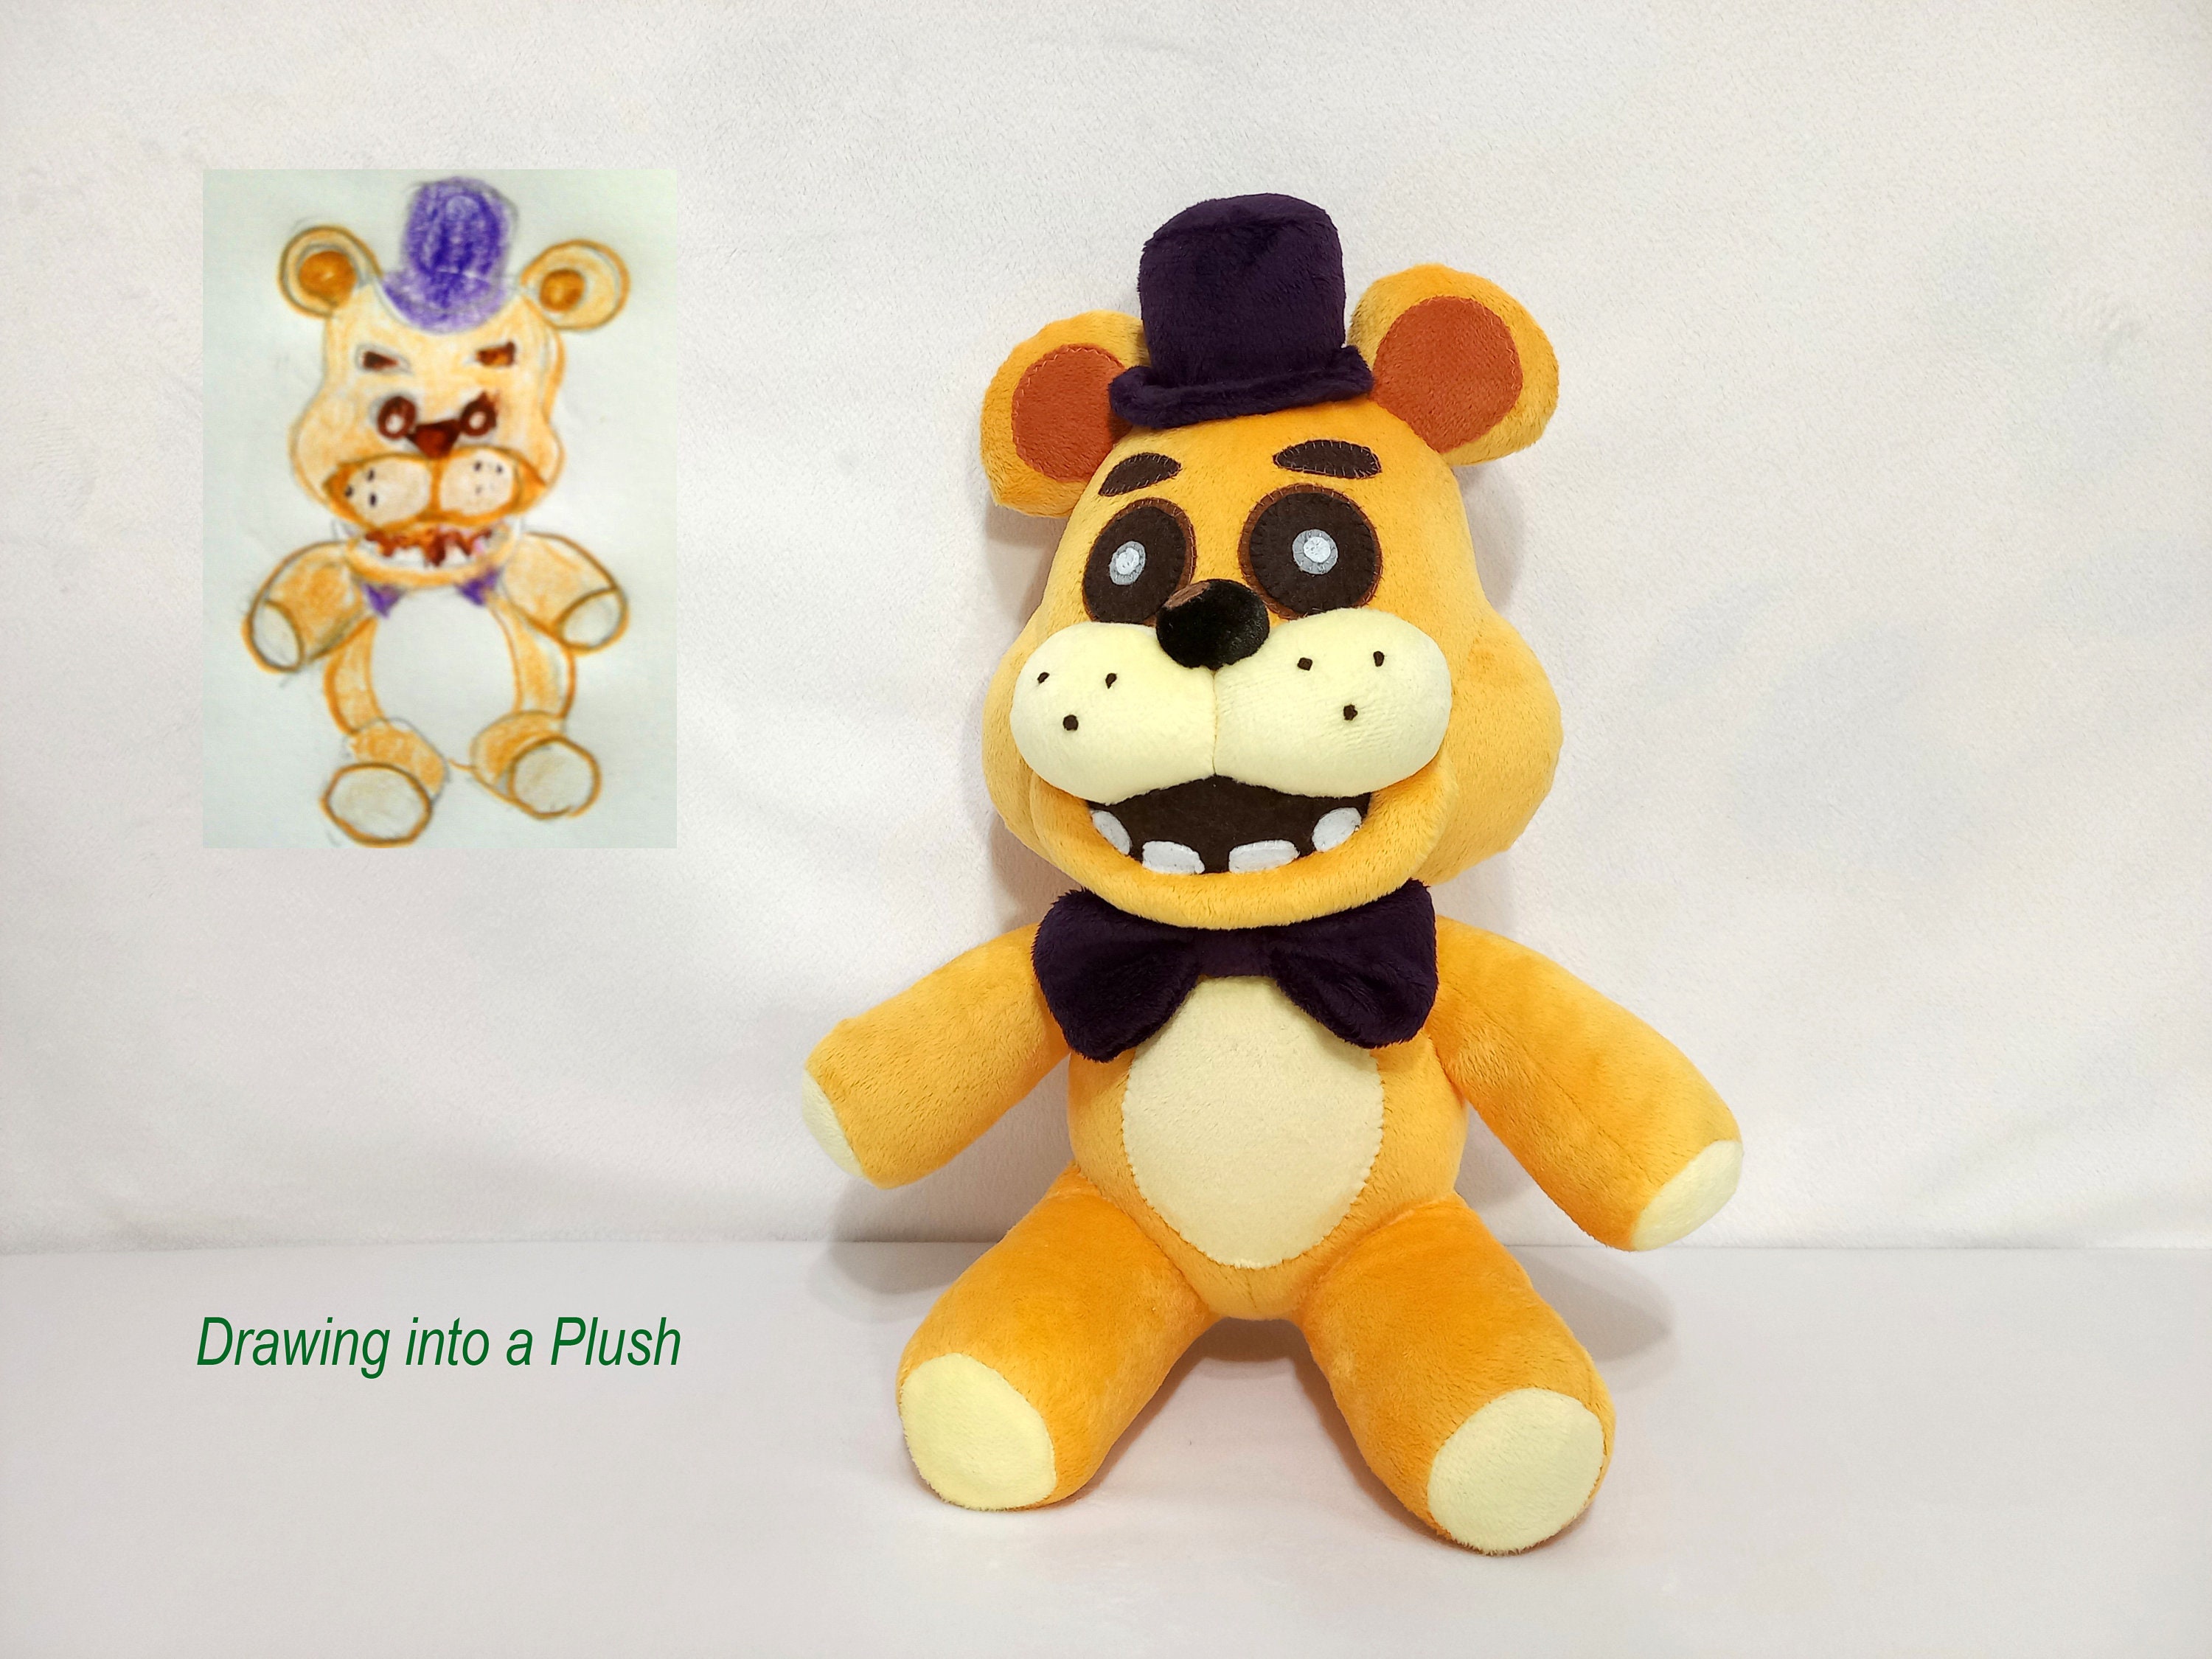 NEW 23cm FNAF Five Nights At Freddy's plush toys Nightmare Fredbear Golden  GIFT